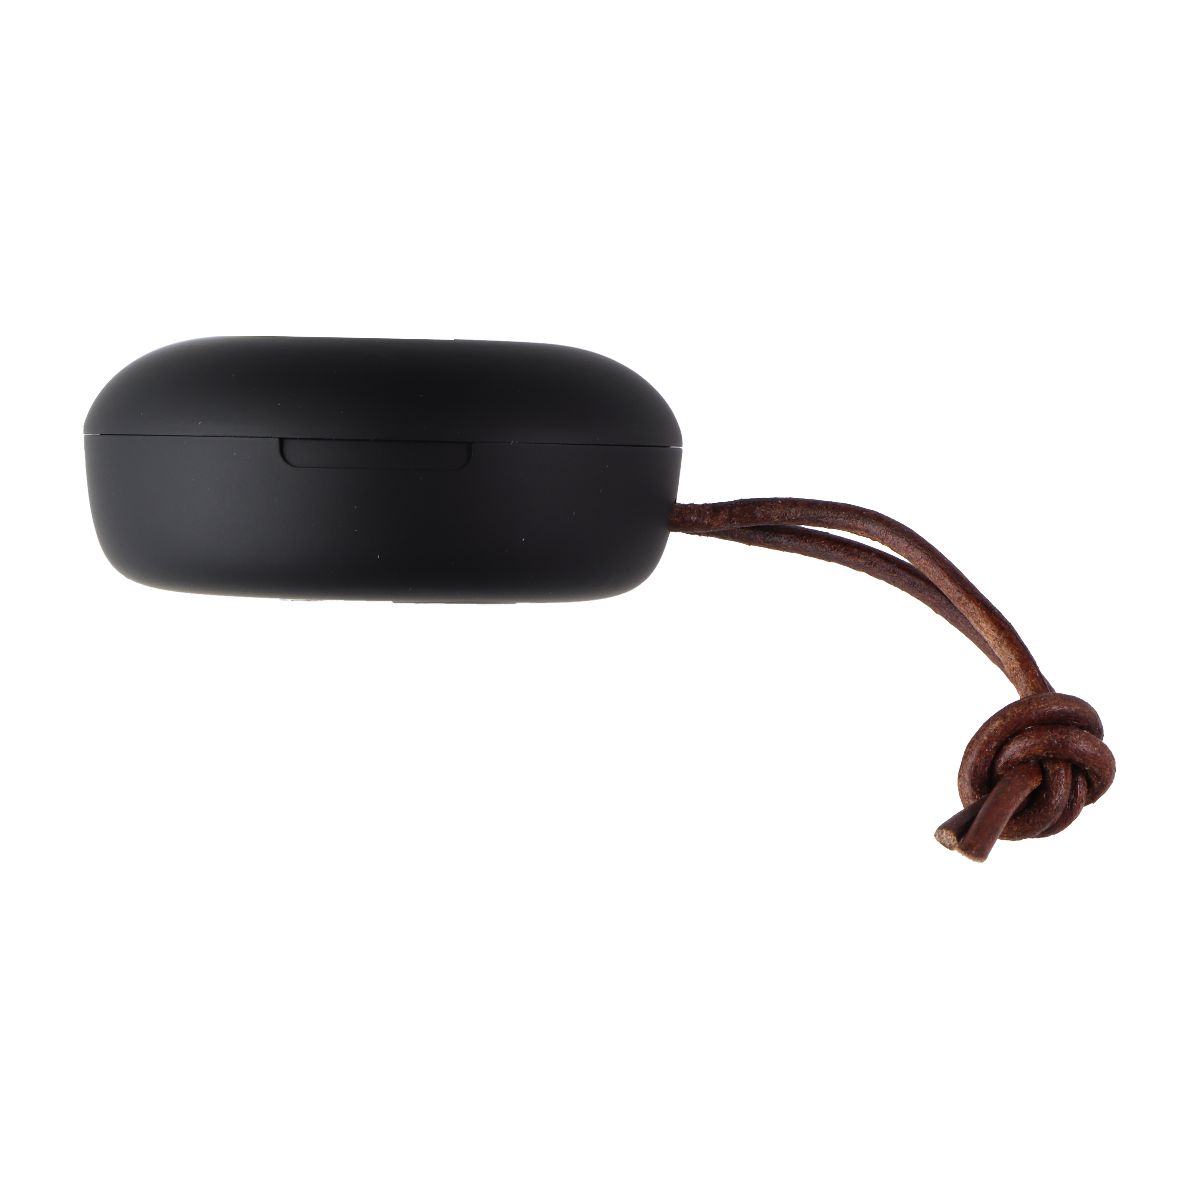 Sudio Fem True Wireless In-Ear Earphones - Black Portable Audio - Headphones Sudio    - Simple Cell Bulk Wholesale Pricing - USA Seller